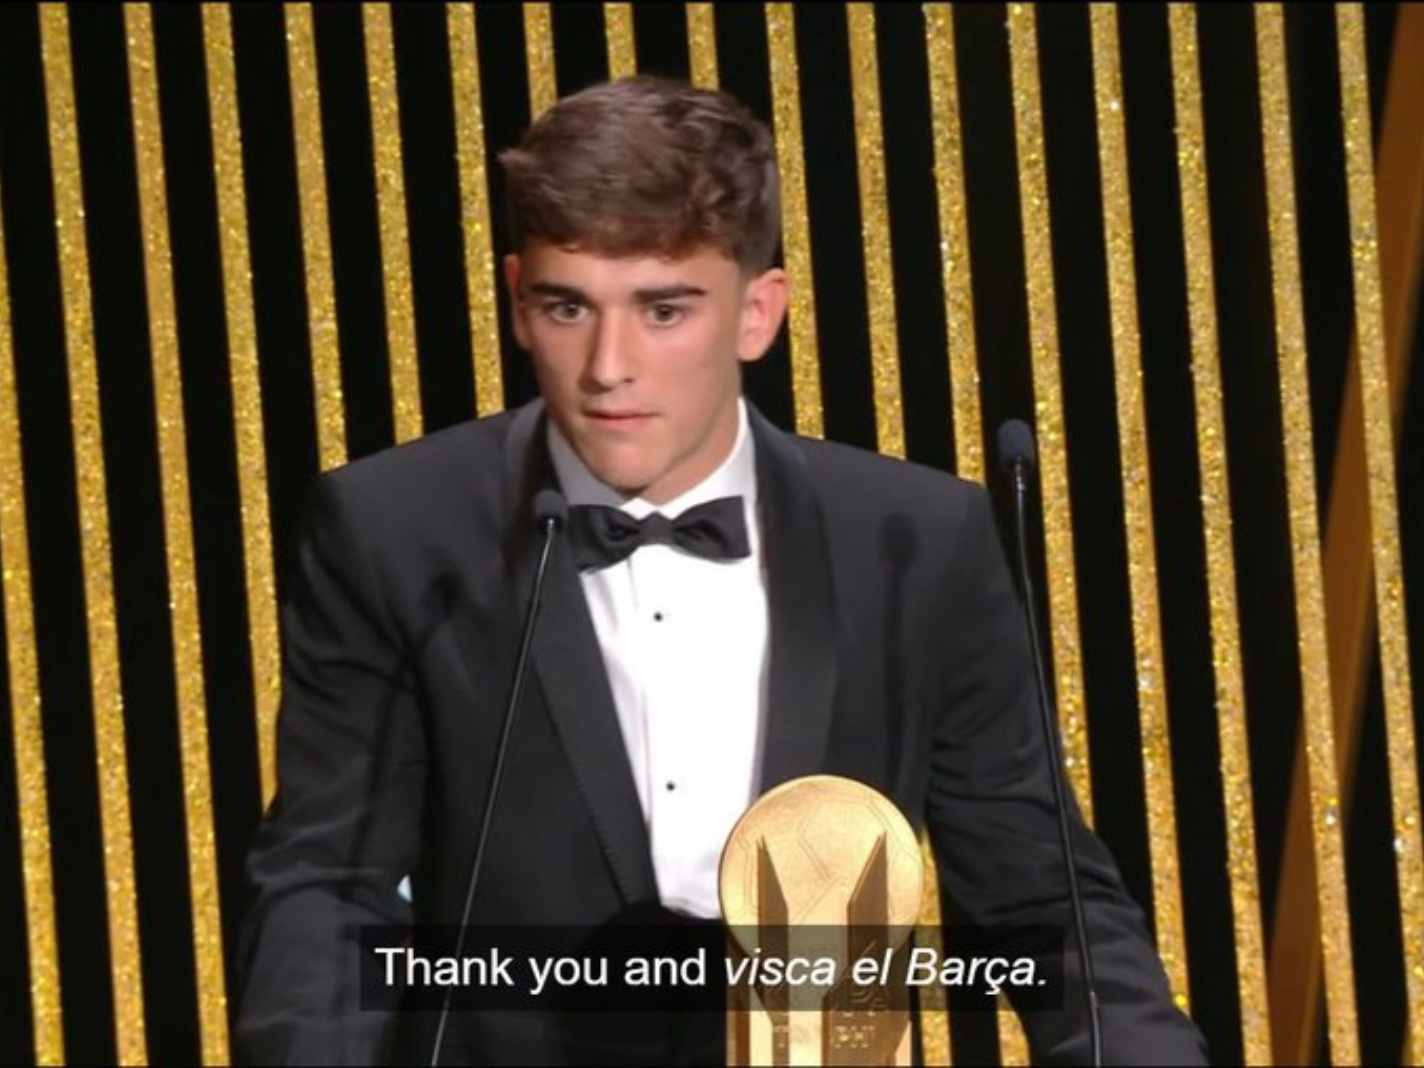 Fearless: Gavi Ended his Ballon d’Or Speech with Visca El Barca Against Advice 